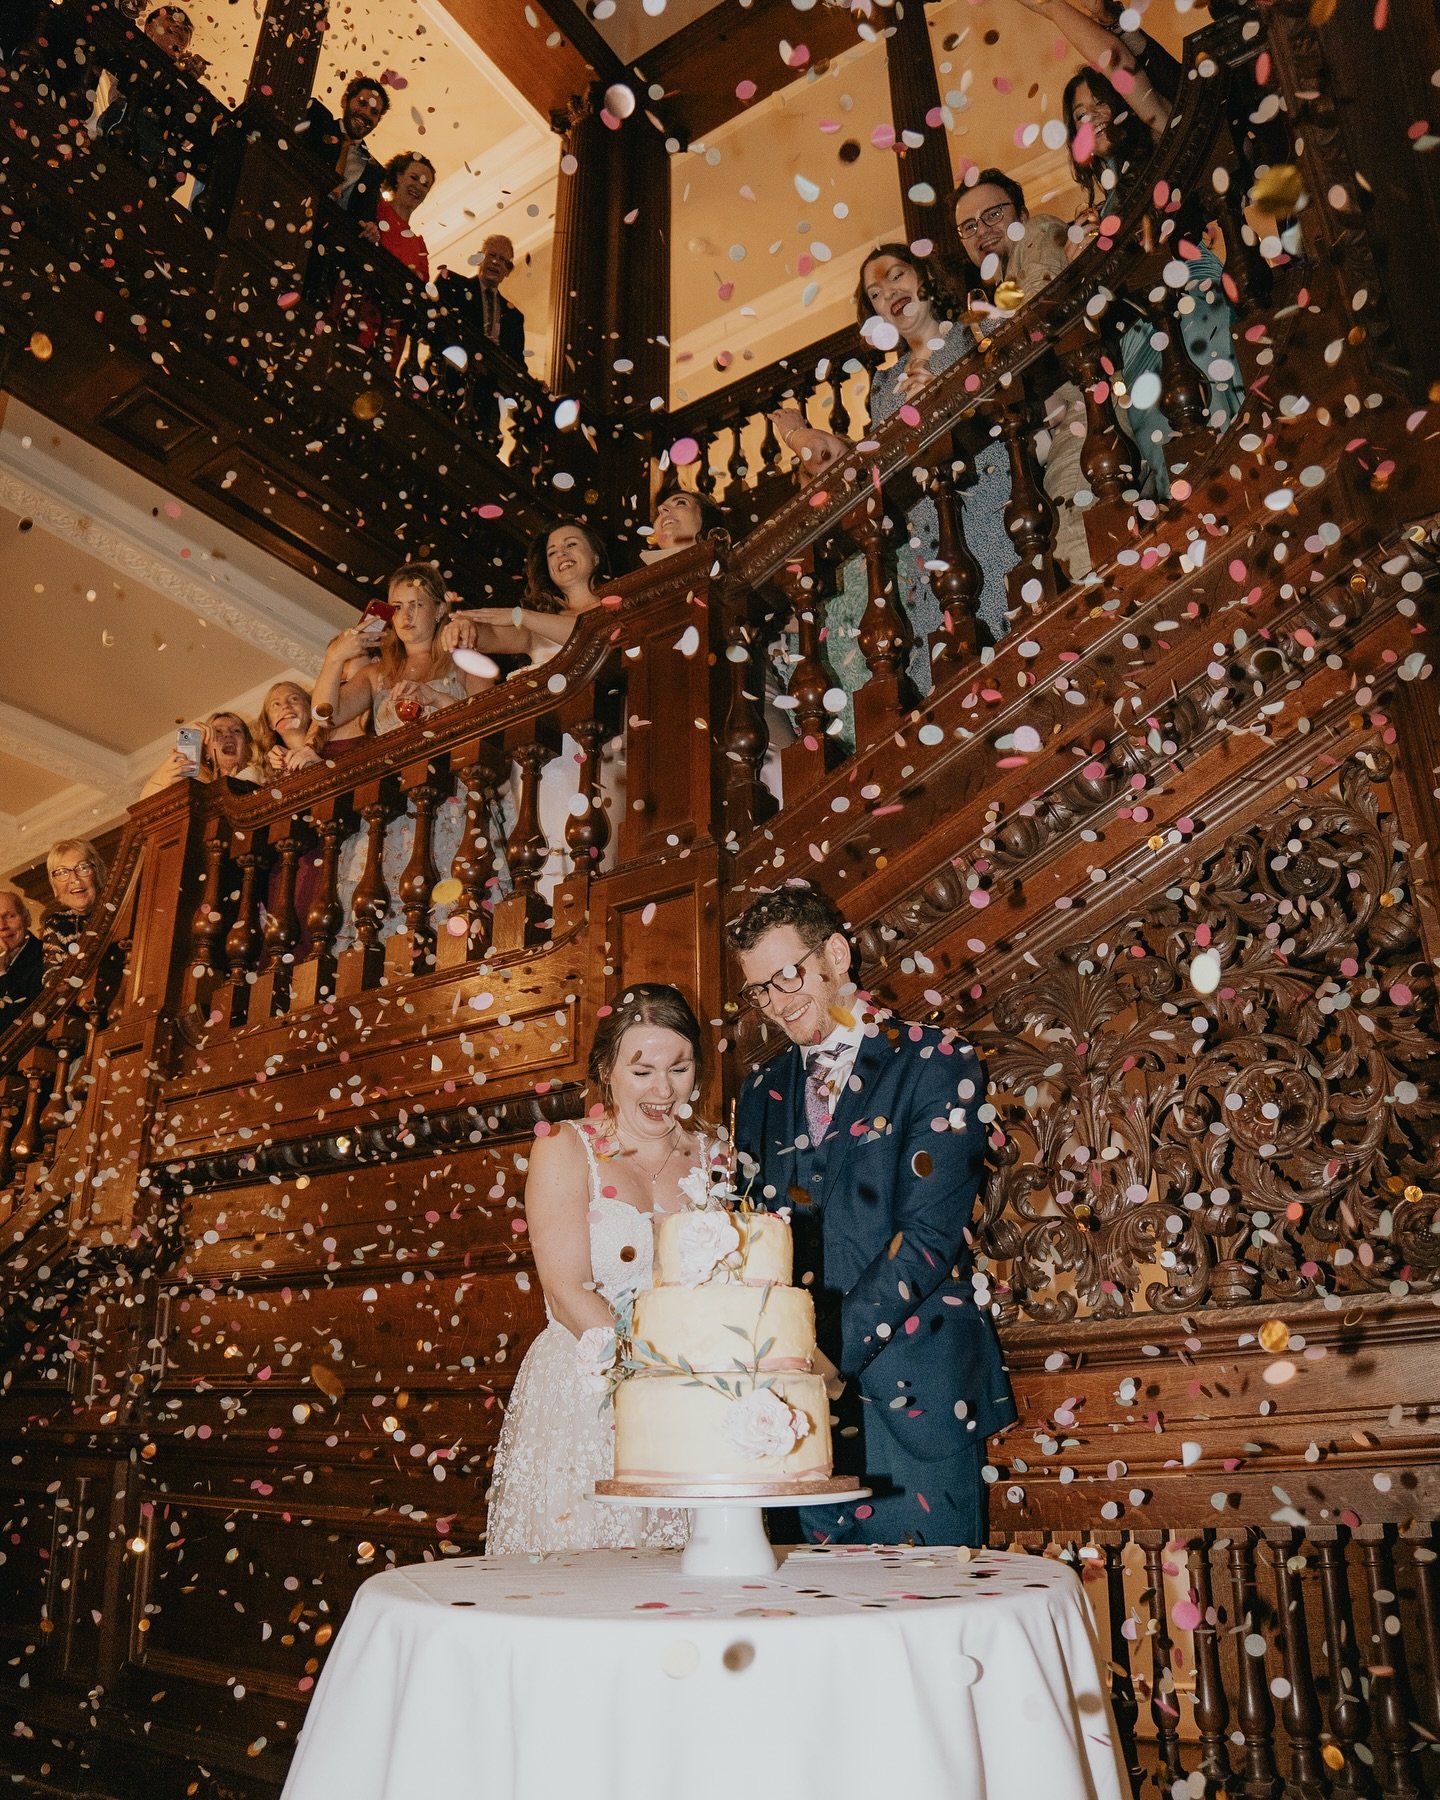 The best cake cut everrrrrrr @bourtonhall ✨🎂🎉

#bourtonhall #cakecut #confetti #wedding #weddingphotography #weddingphotographer #weddings #bride #groom #weddingphotos #warwickshirewedding #warwickshireweddingphotographer #midlandsweddingphotograph